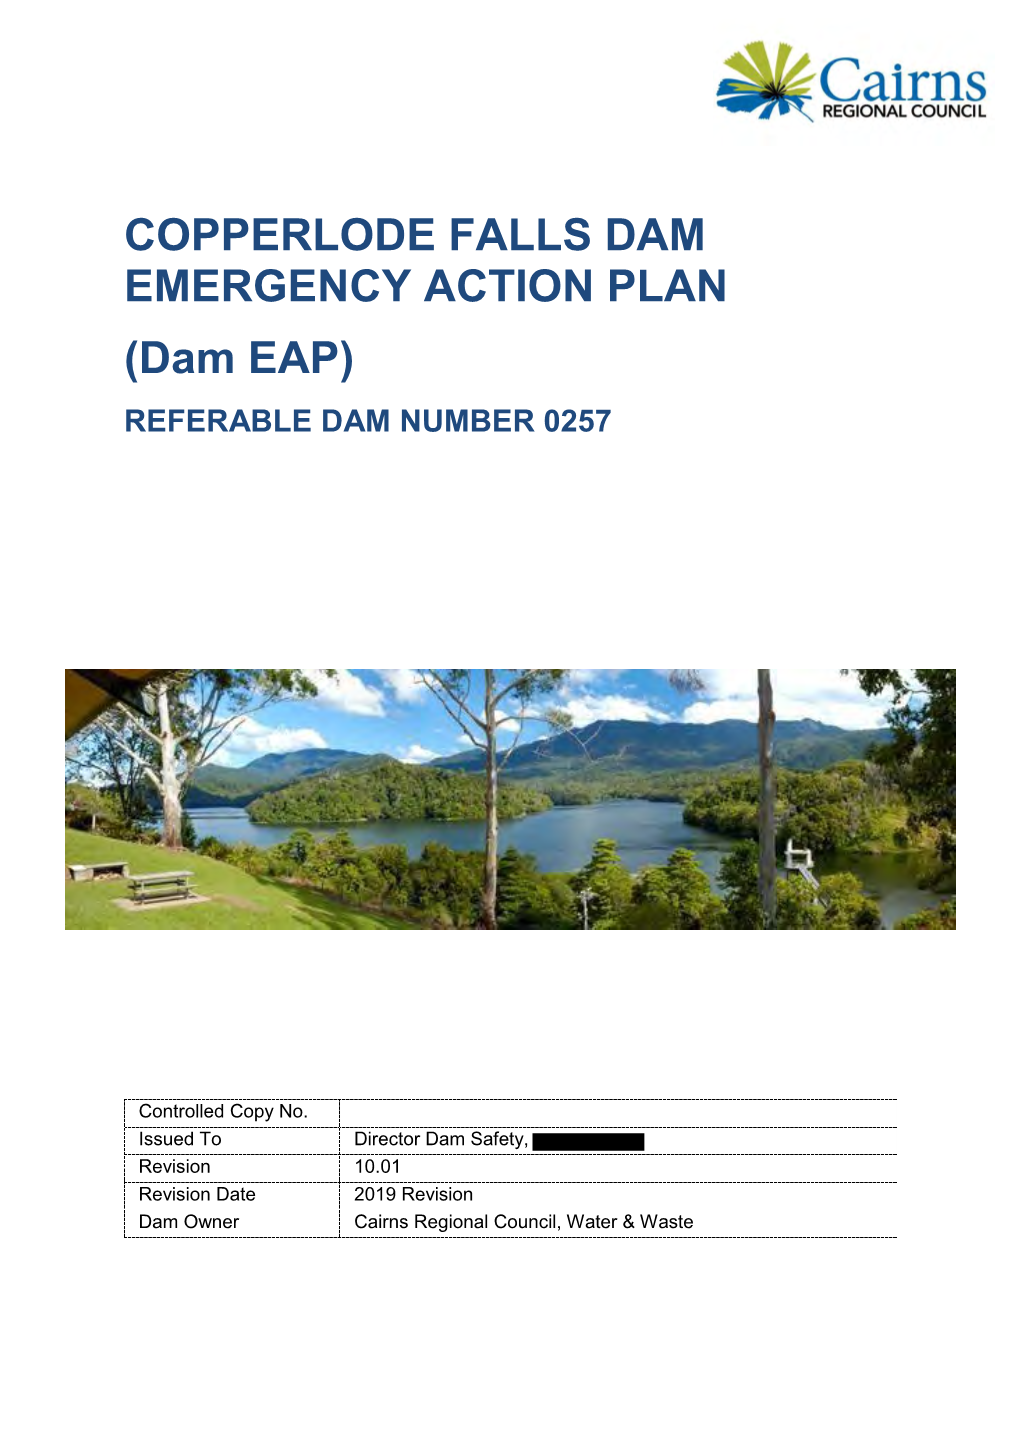 COPPERLODE FALLS DAM EMERGENCY ACTION PLAN (Dam EAP) REFERABLE DAM NUMBER 0257